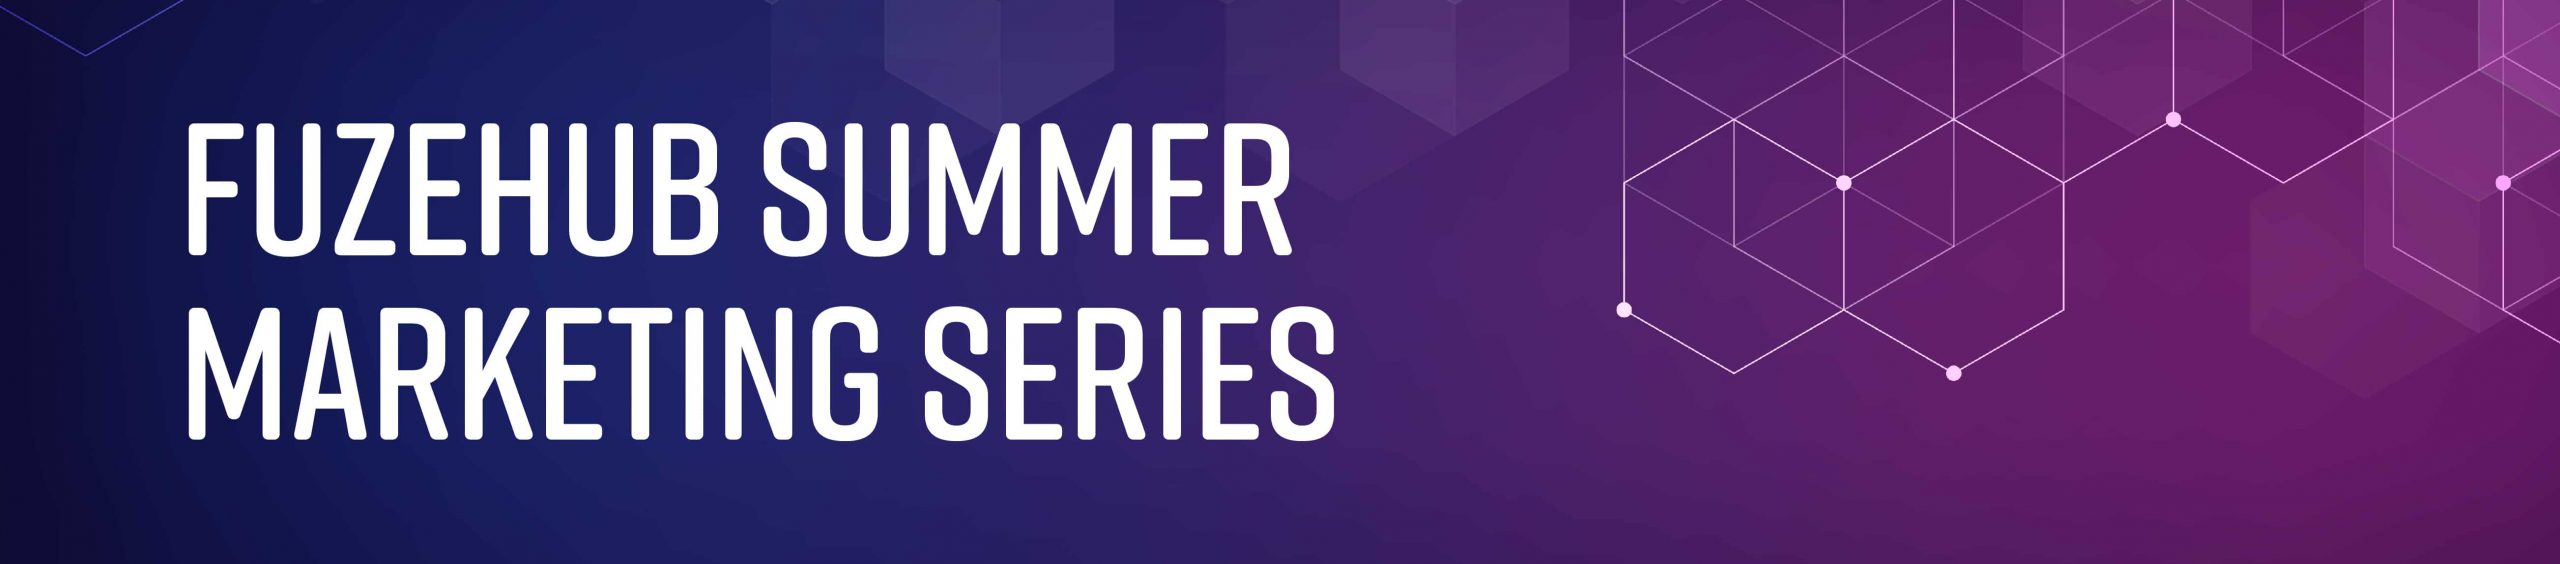 Summer Marketing Series